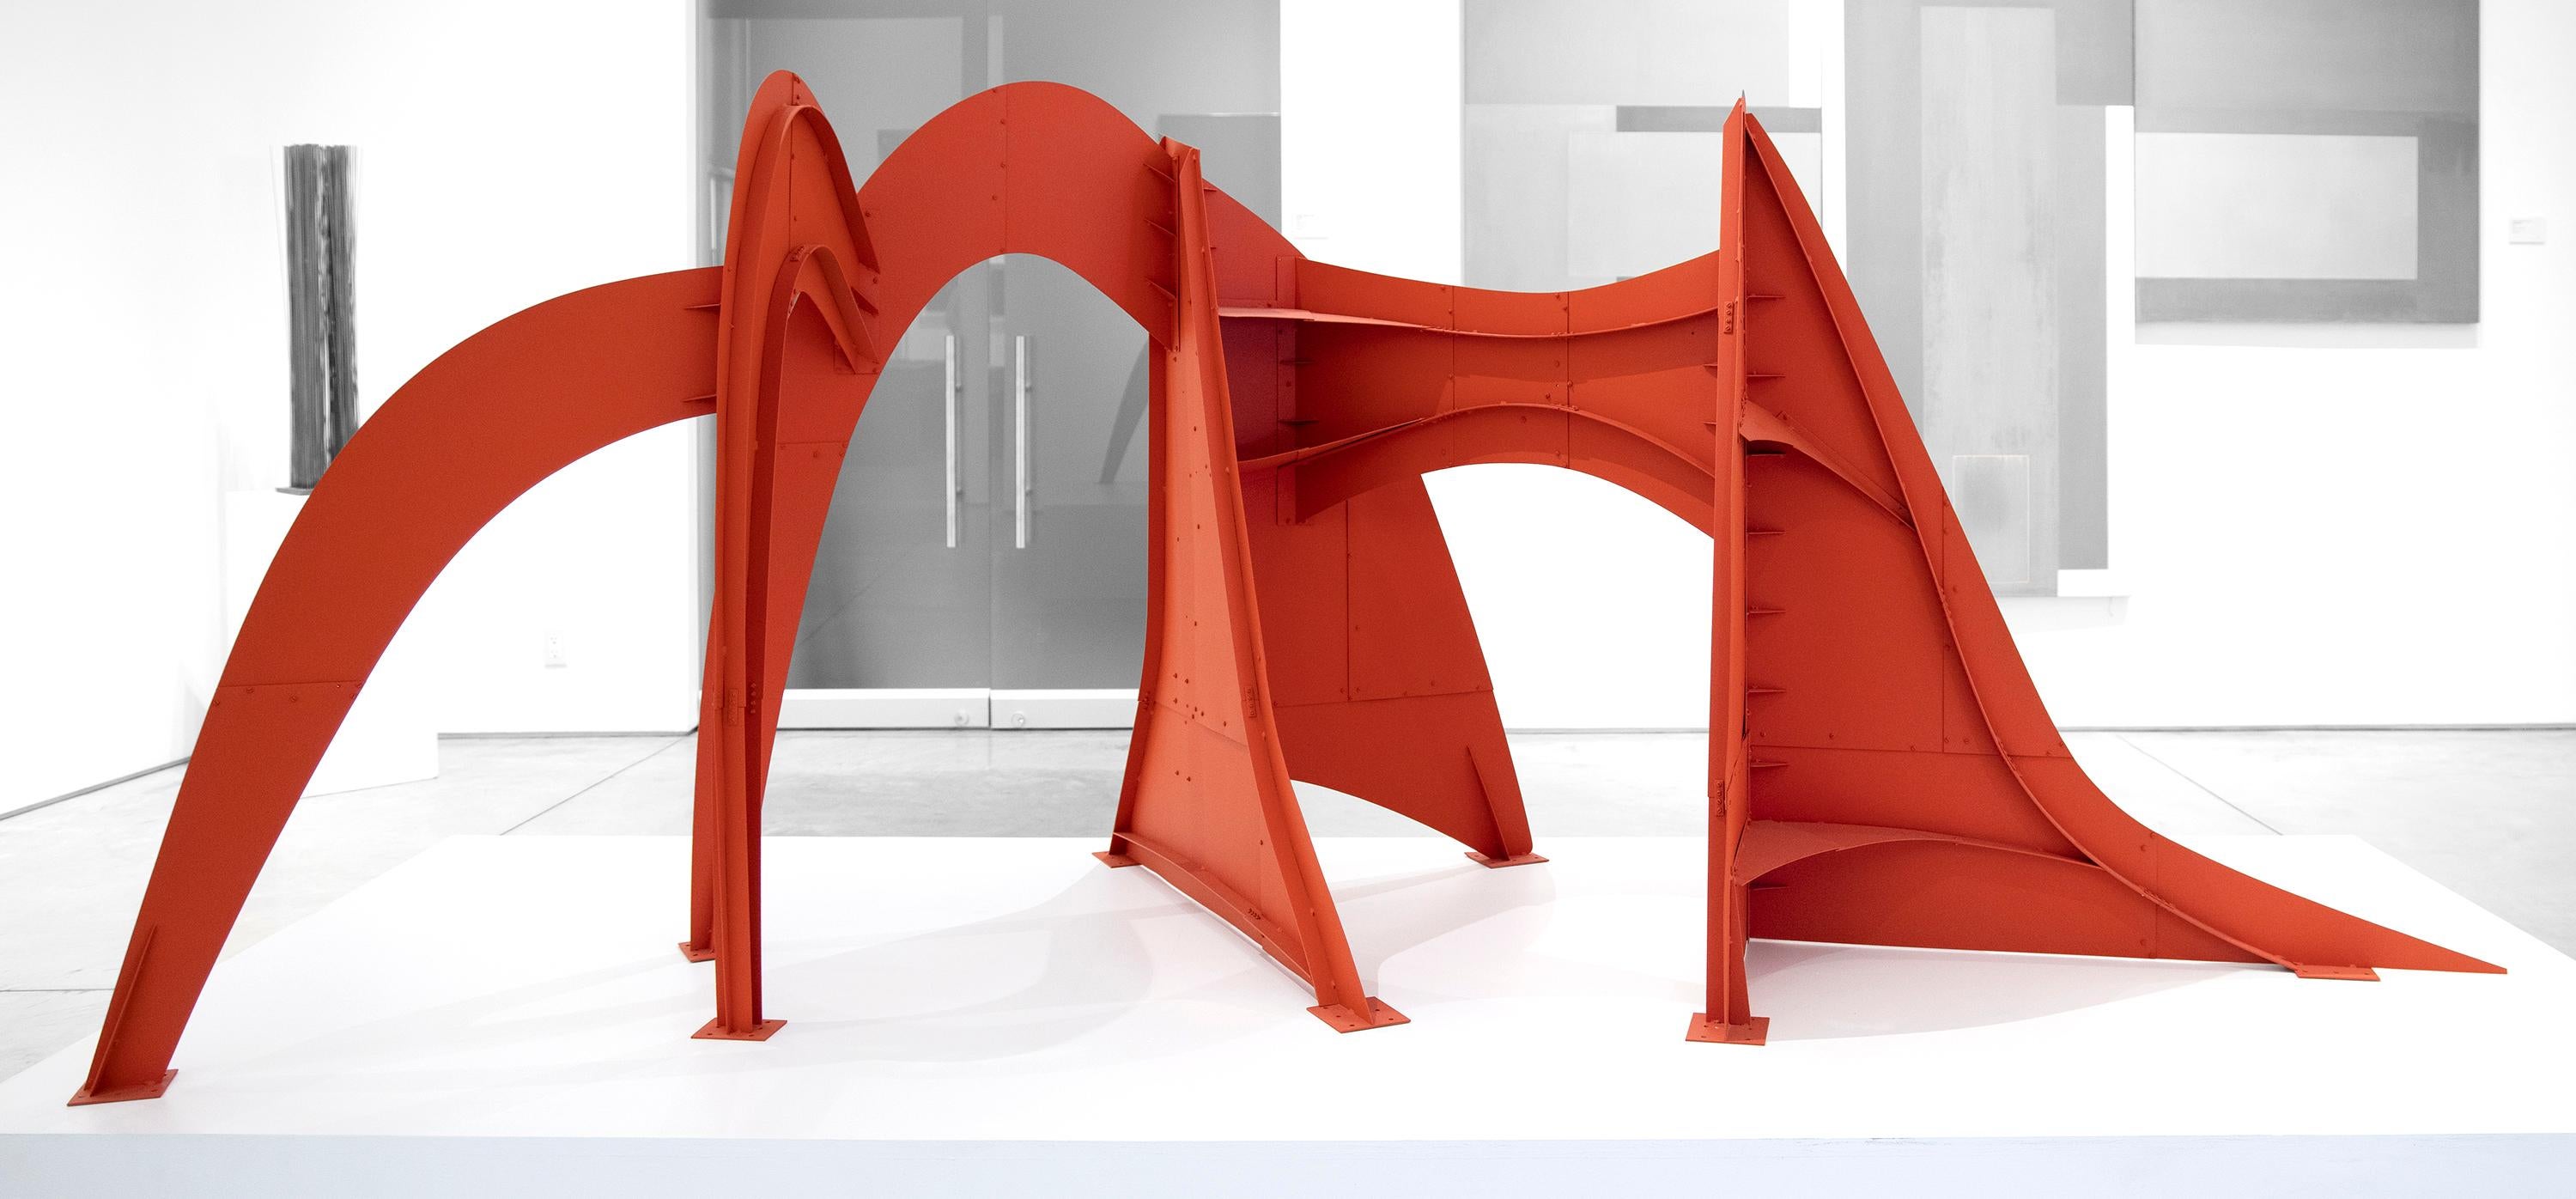 Jerusalem Stabile (Intermediate Maquette) - Sculpture by Alexander Calder